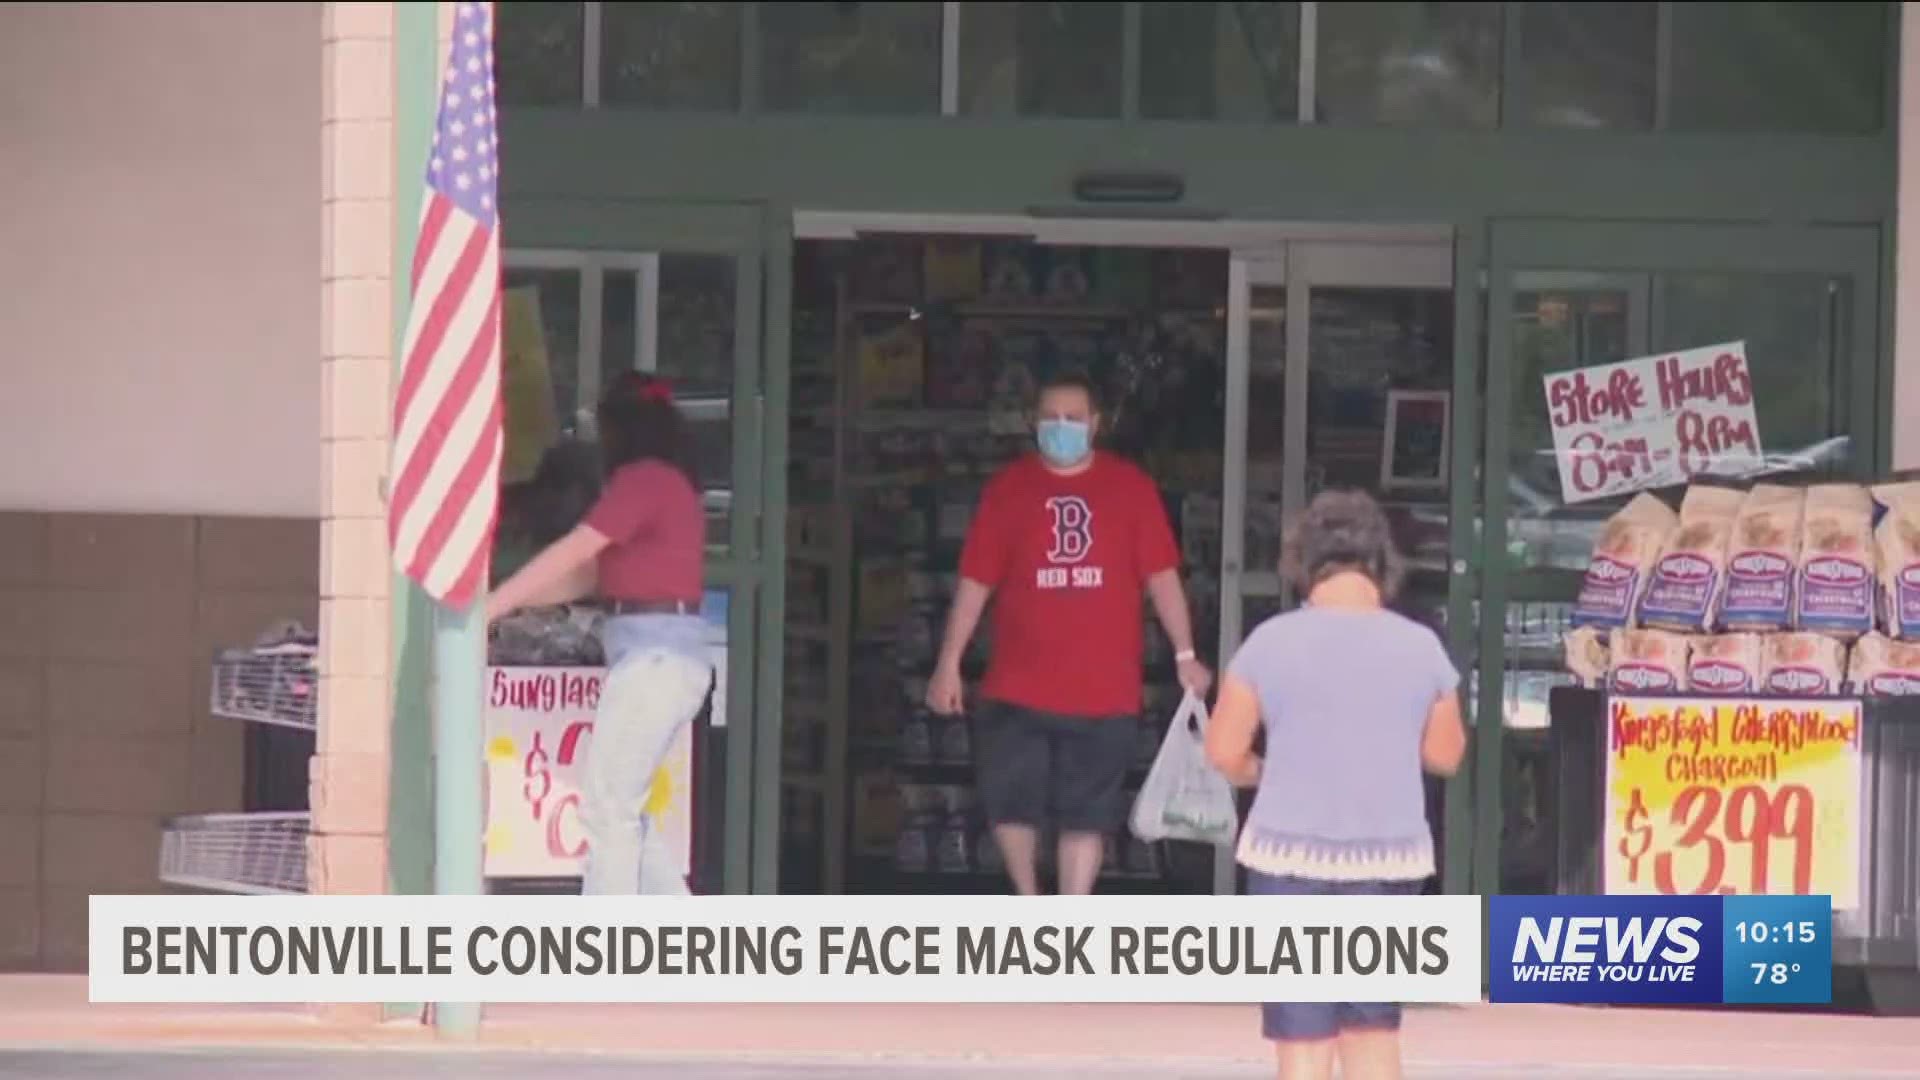 Bentonville considering face mask regulations